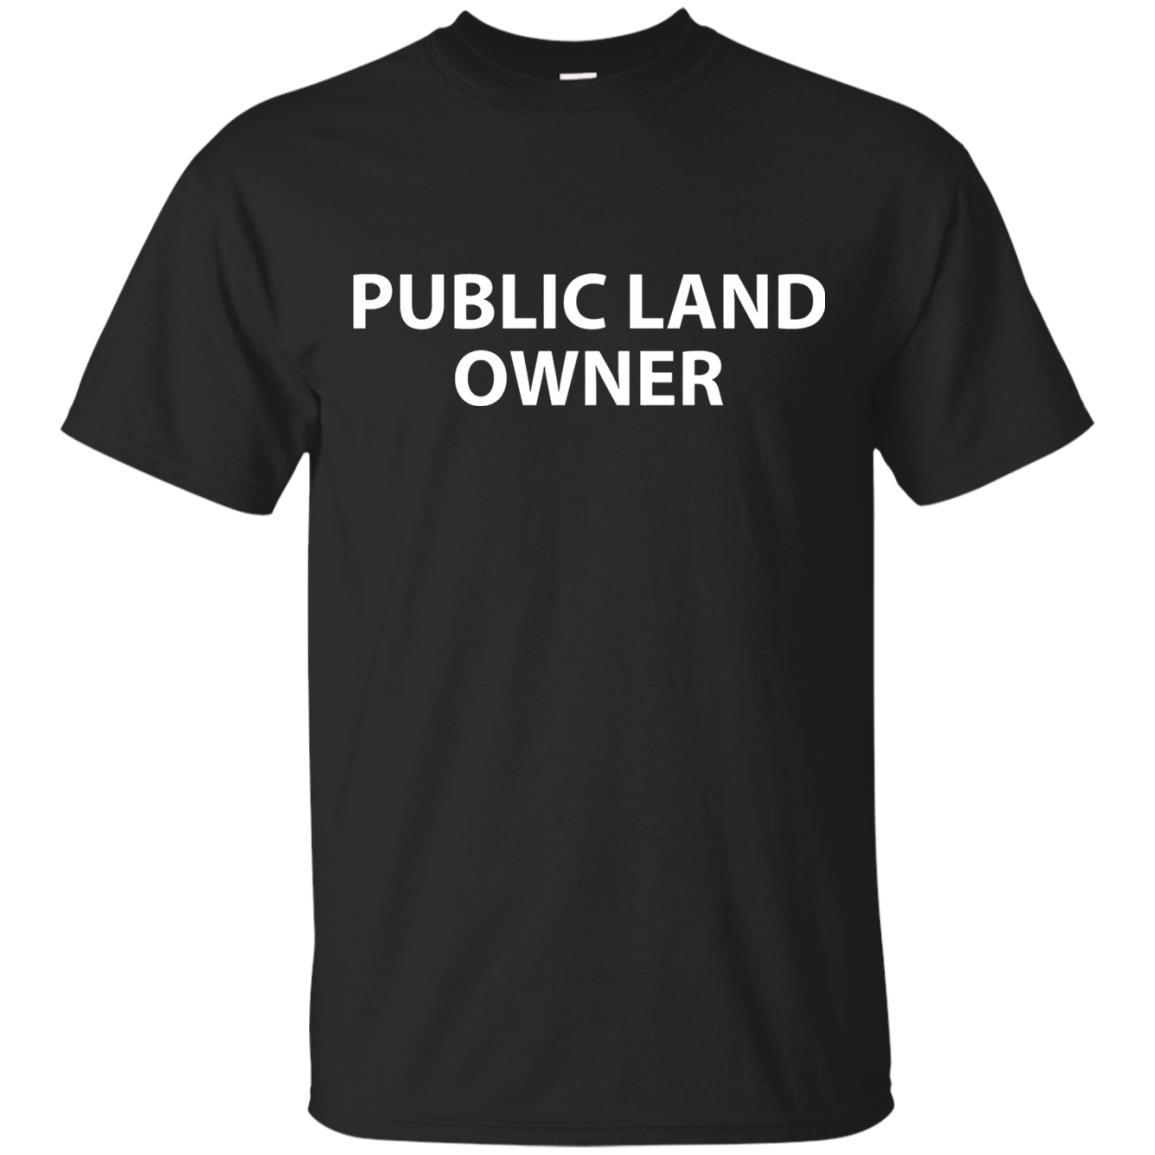 public land owner t shirt - black